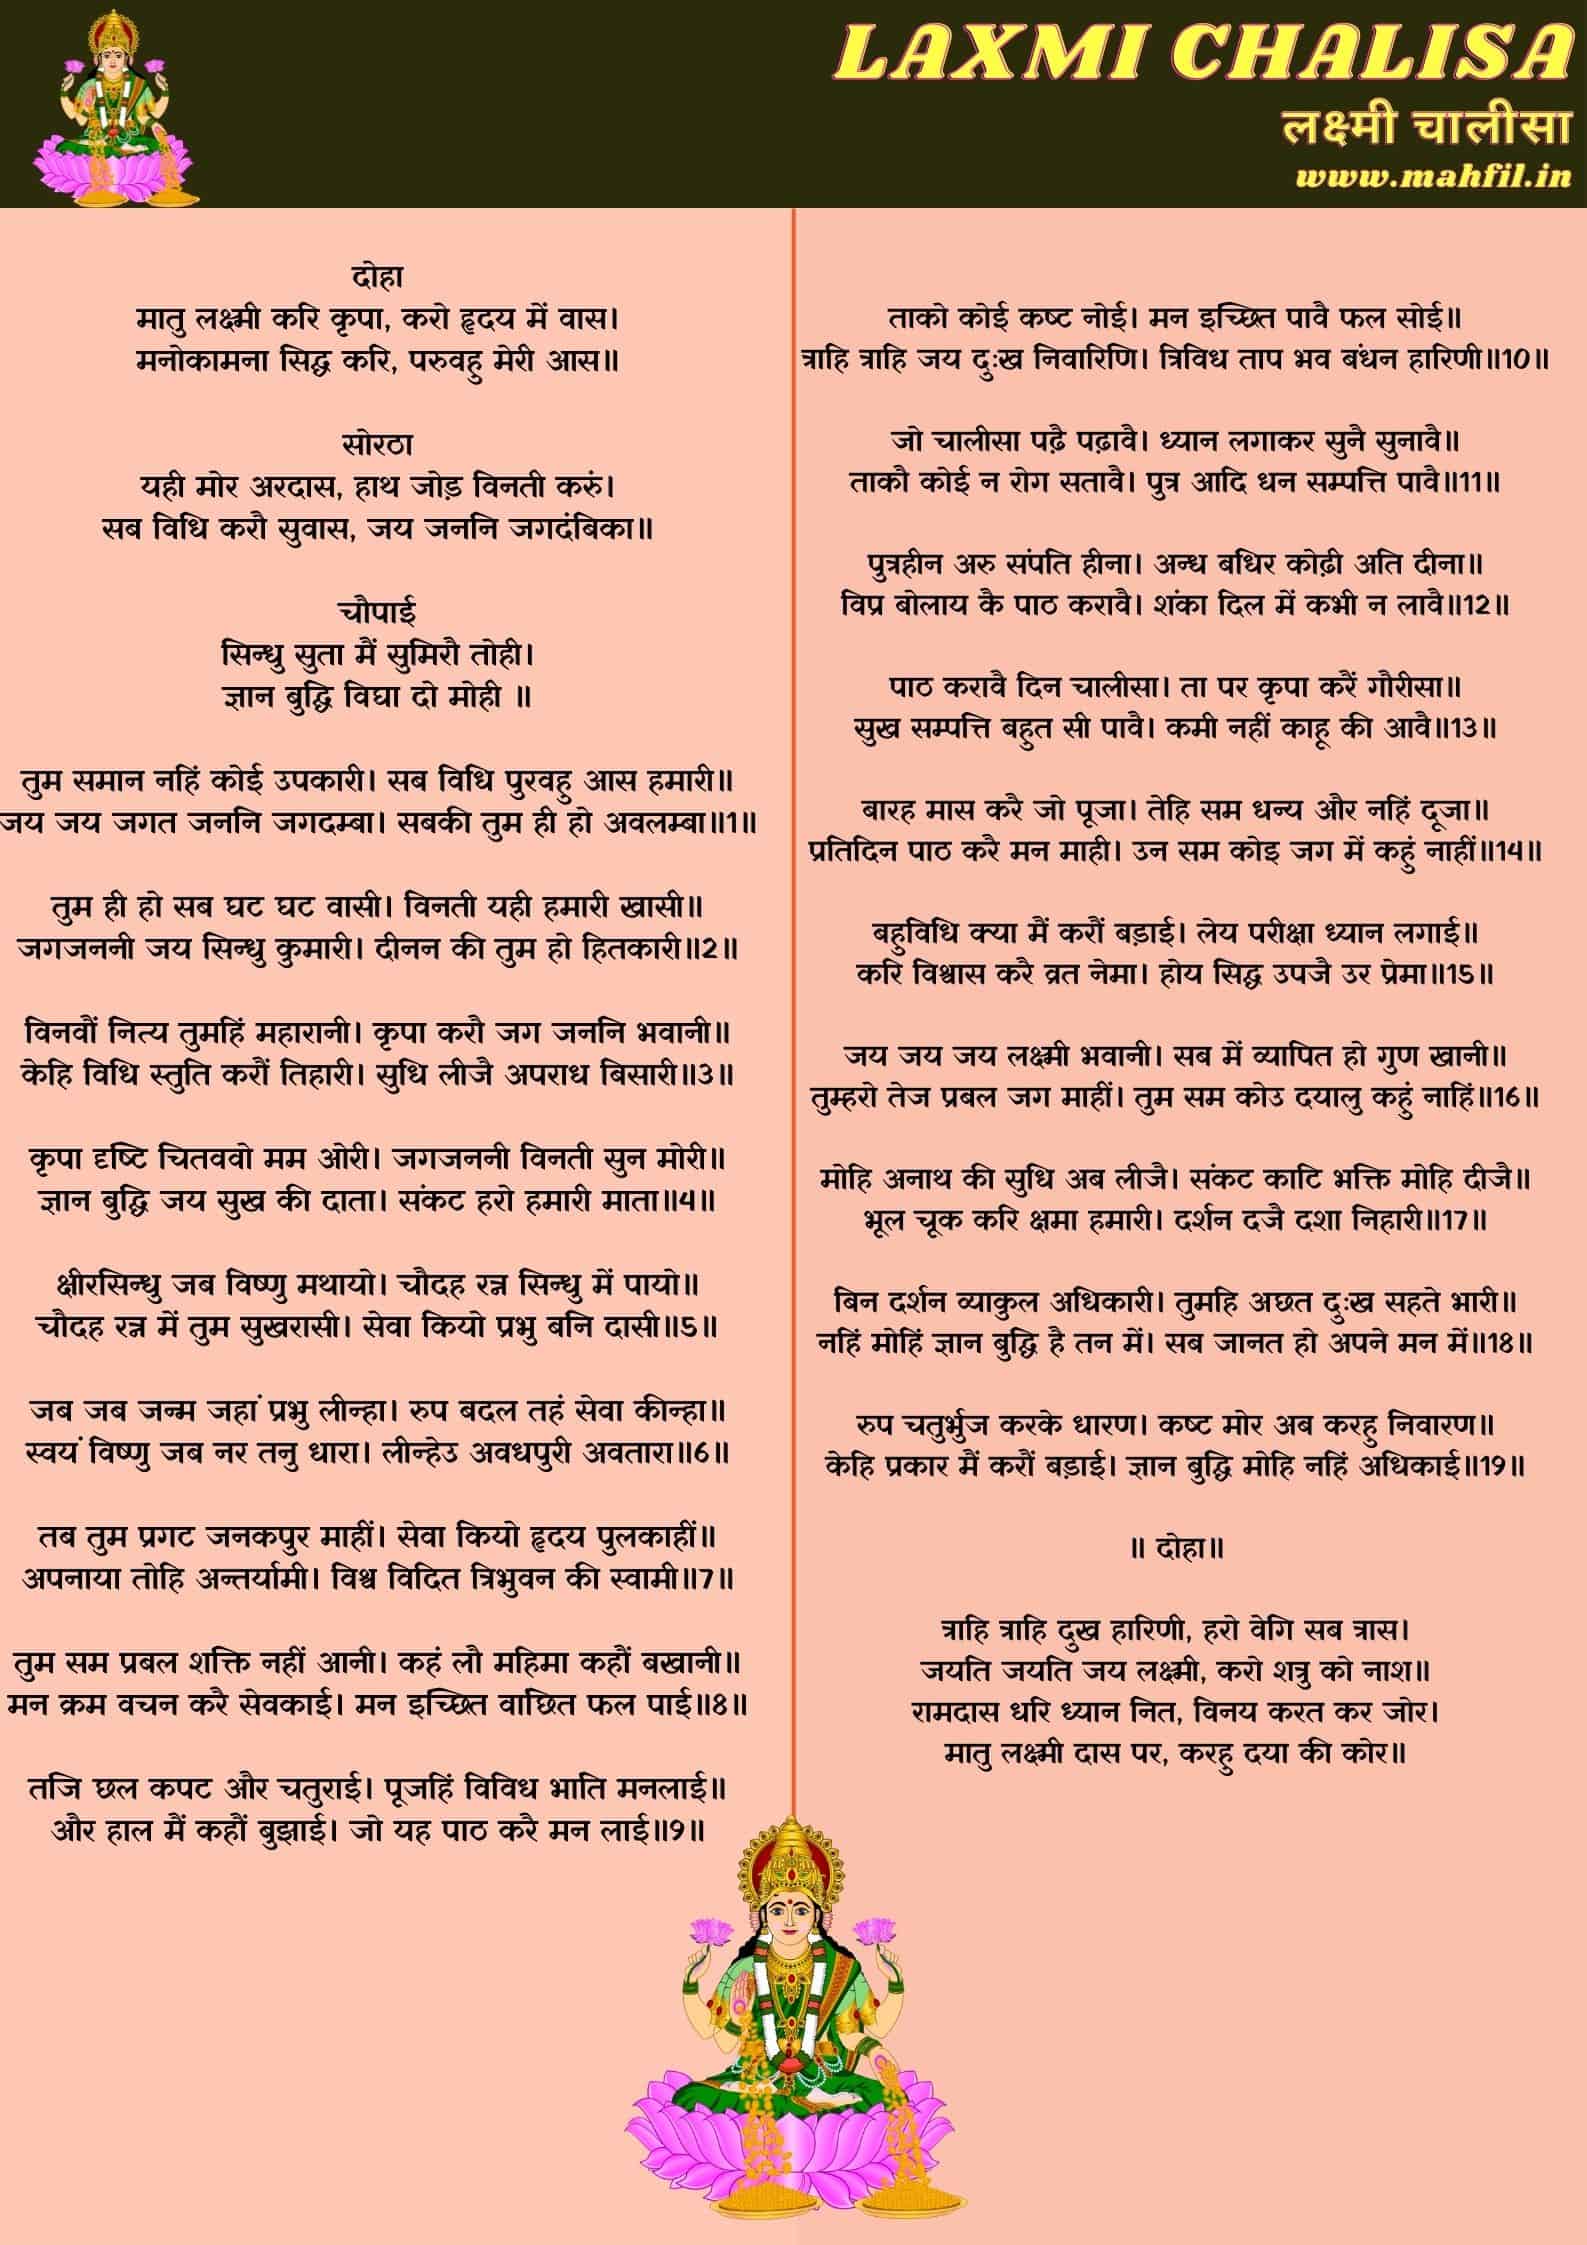 Lakshmi Chalisa Lyrics in Hindi 